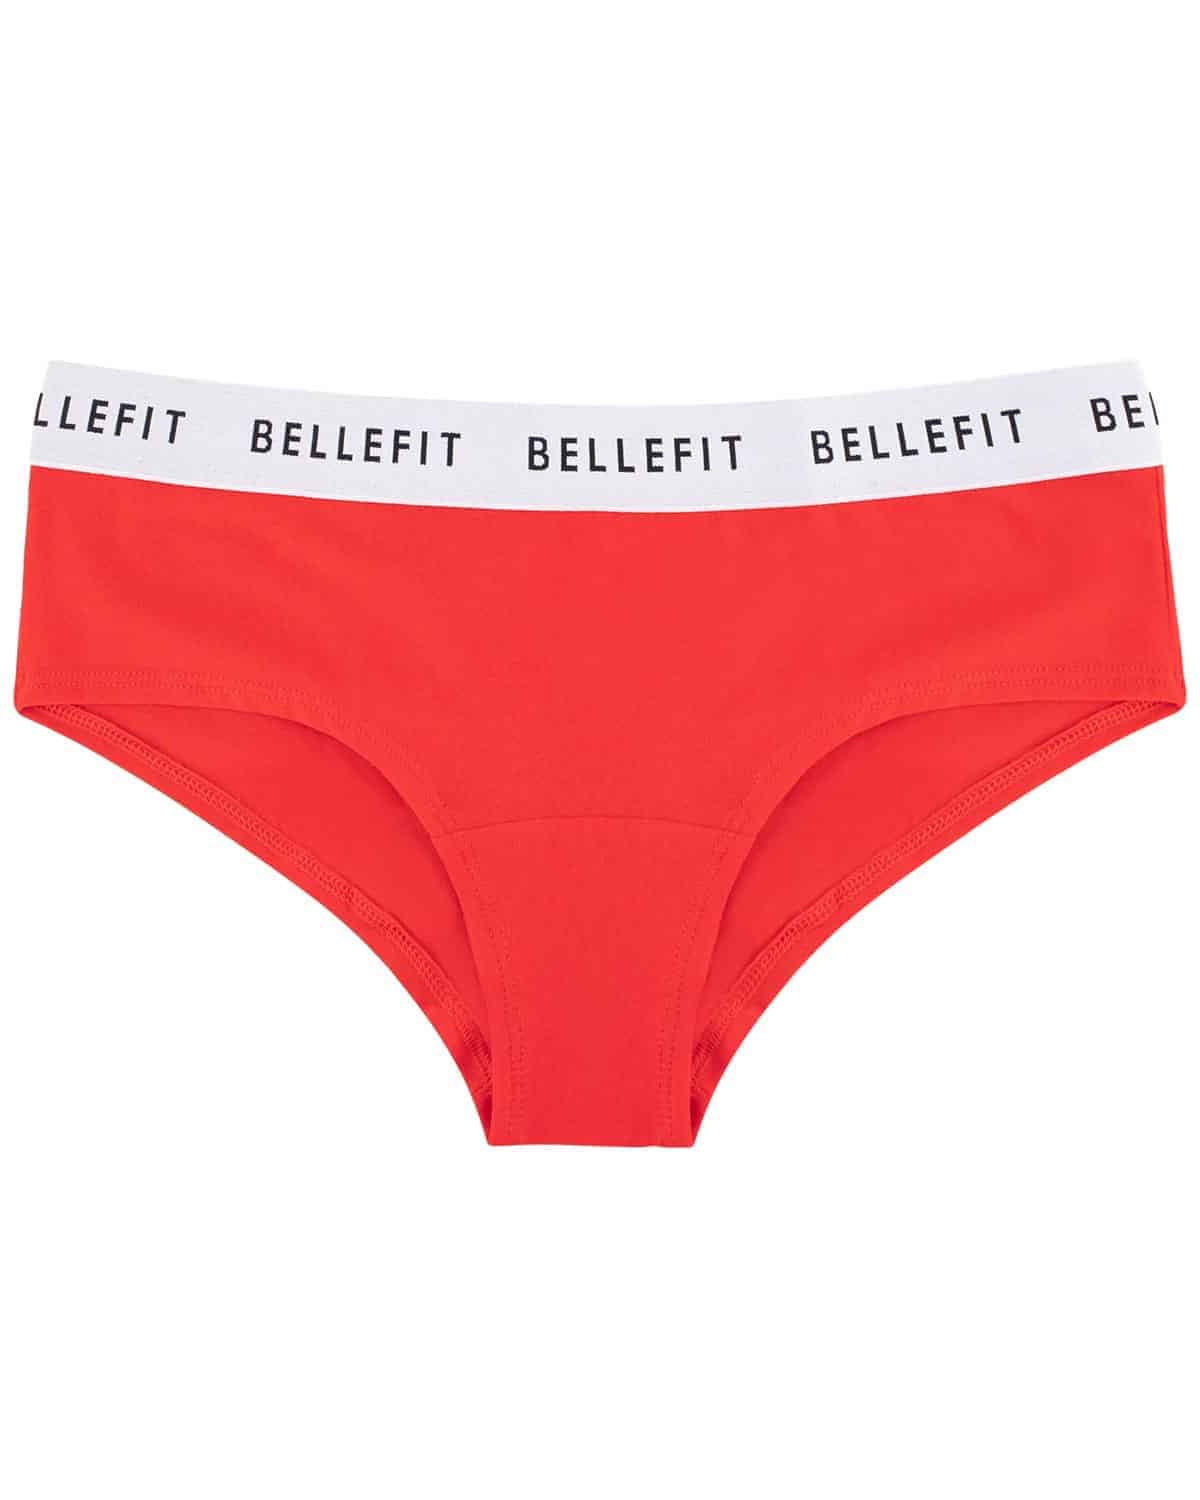 Bellefit Womens Cheeky Cotton Underwear Panties for Women Underpants